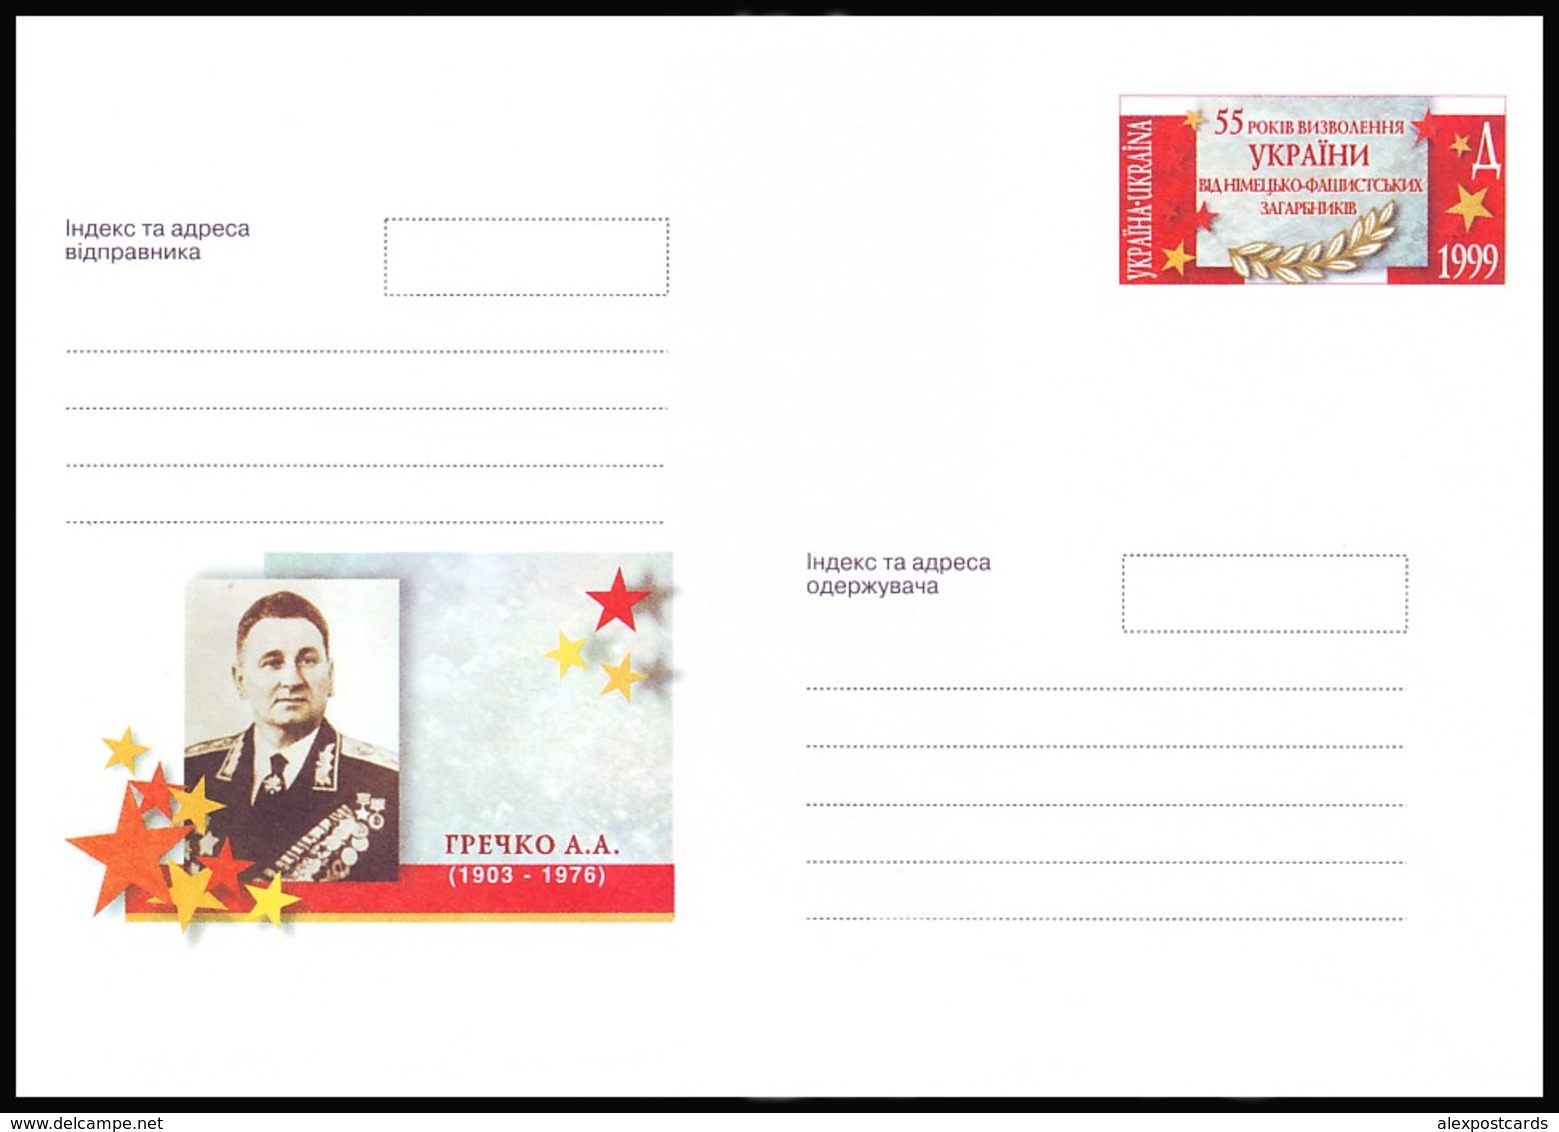 UKRAINE 1999. (9-3180). A.A. GRECHKO, MARSHALL OF THE SOVIET UNION. Postal Stationery Stamped Cover (**) - Ukraine